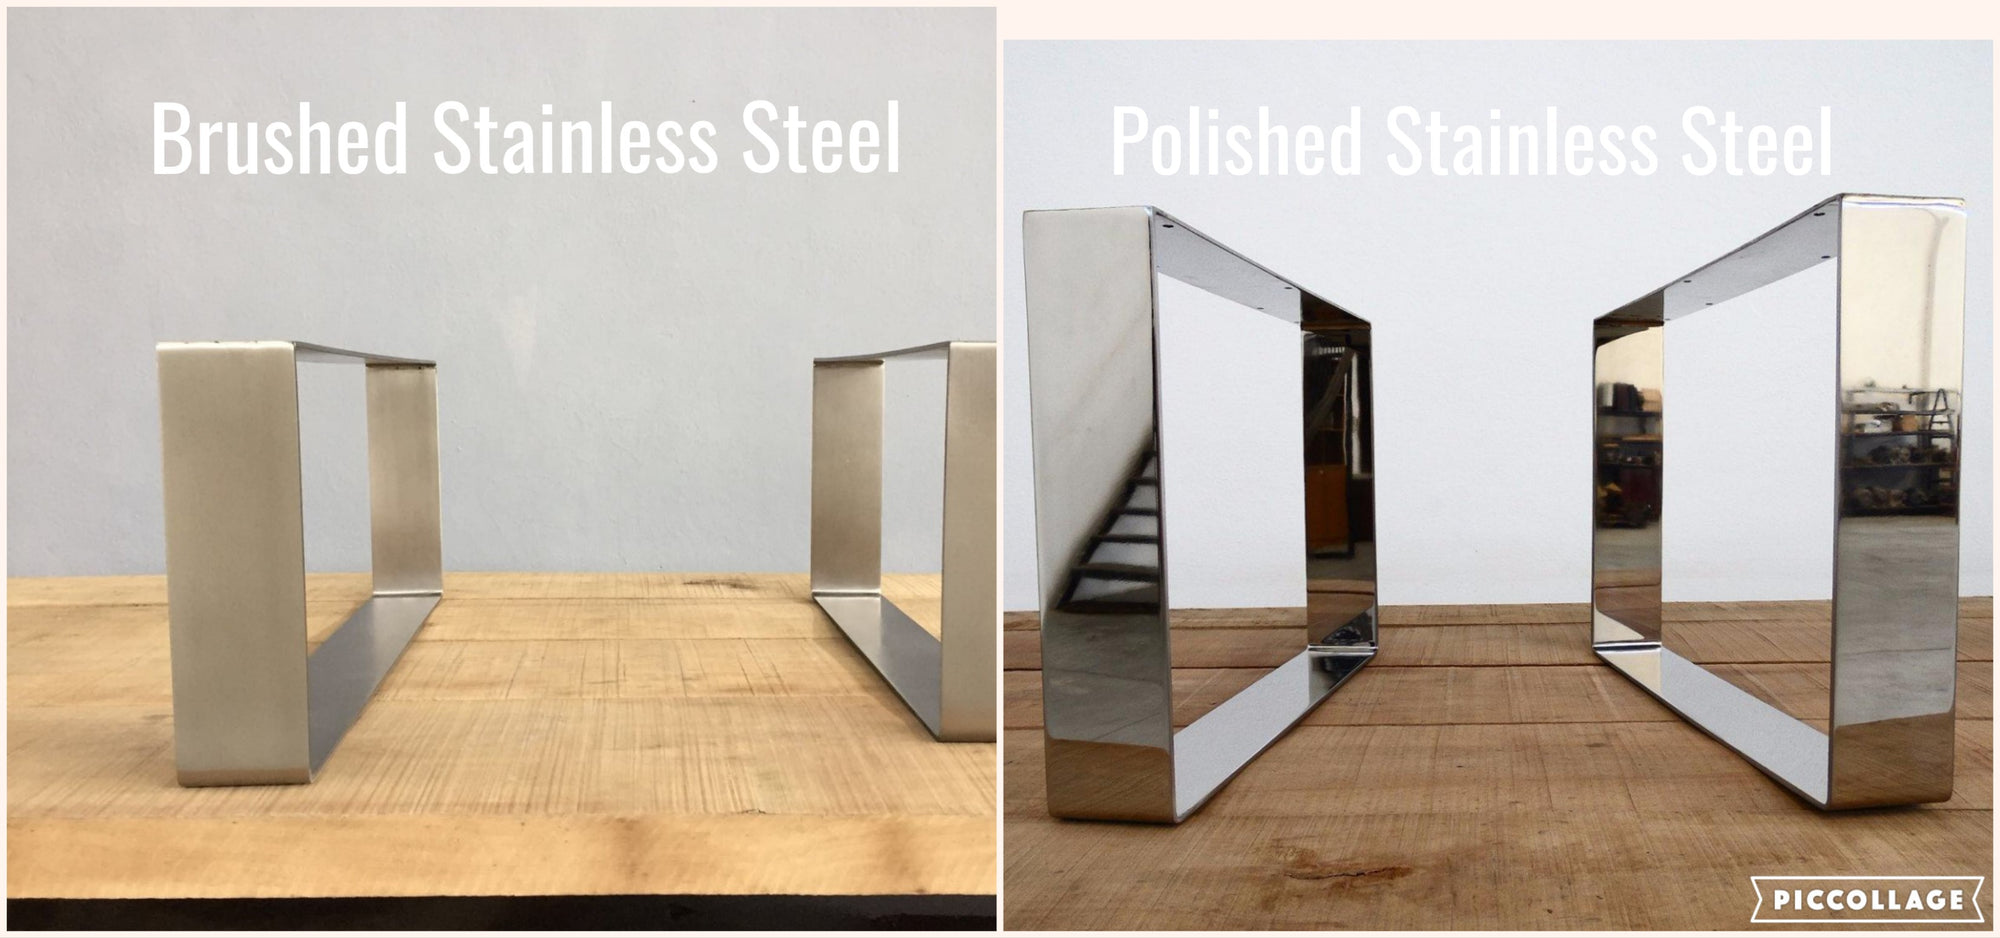 28"  Trapezoid Flat Steel Table Legs, Stainless Steel Set(2)